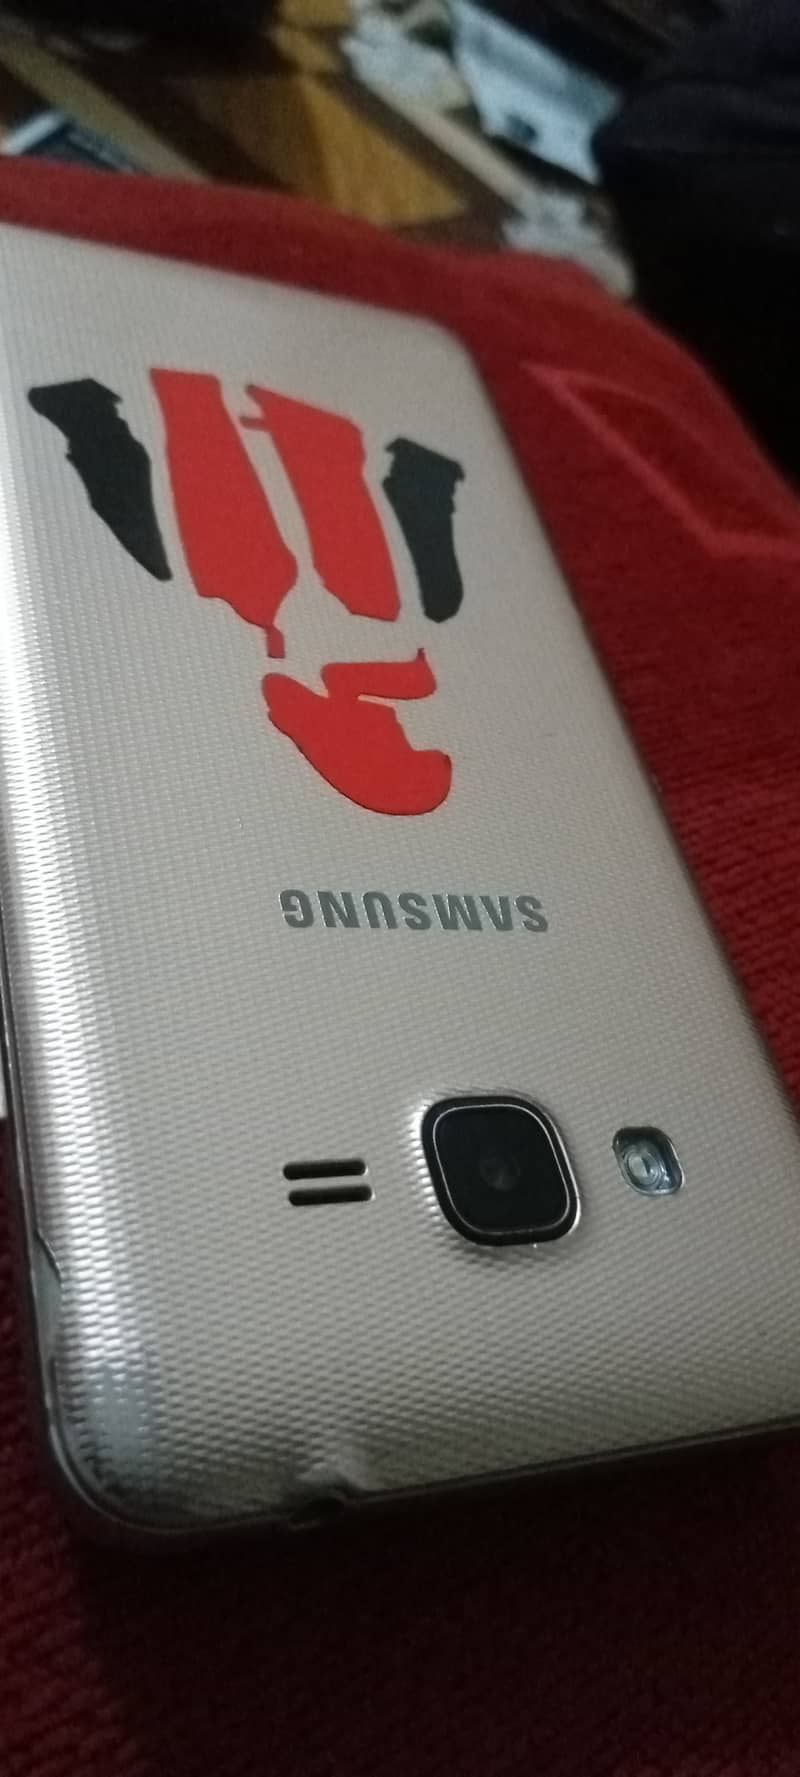 Samsung galaxy grand prime plus mobile phone. 3